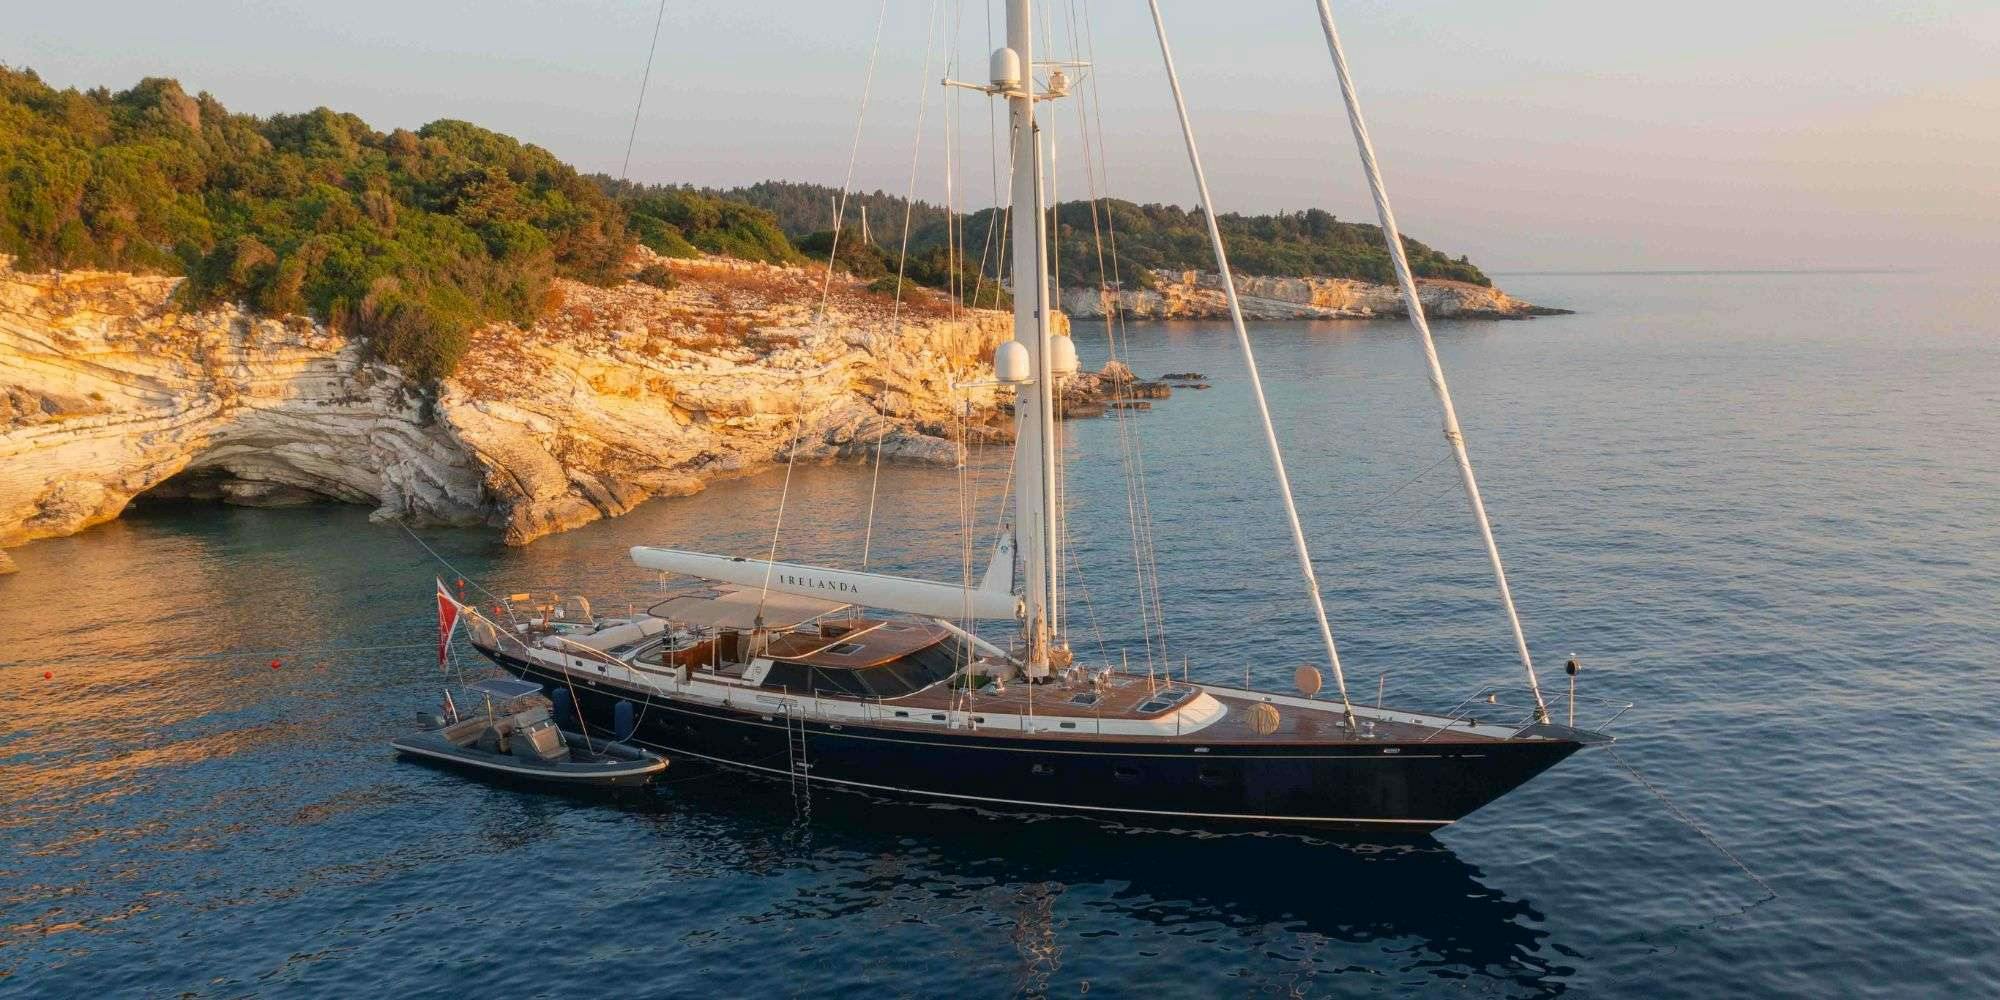 IRELANDA - Yacht Charter Poltu Quatu & Boat hire in W. Med -Naples/Sicily, Greece, W. Med -Riviera/Cors/Sard., Turkey, Croatia | Winter: Caribbean Virgin Islands (US/BVI), Caribbean Leewards, Caribbean Windwards 1